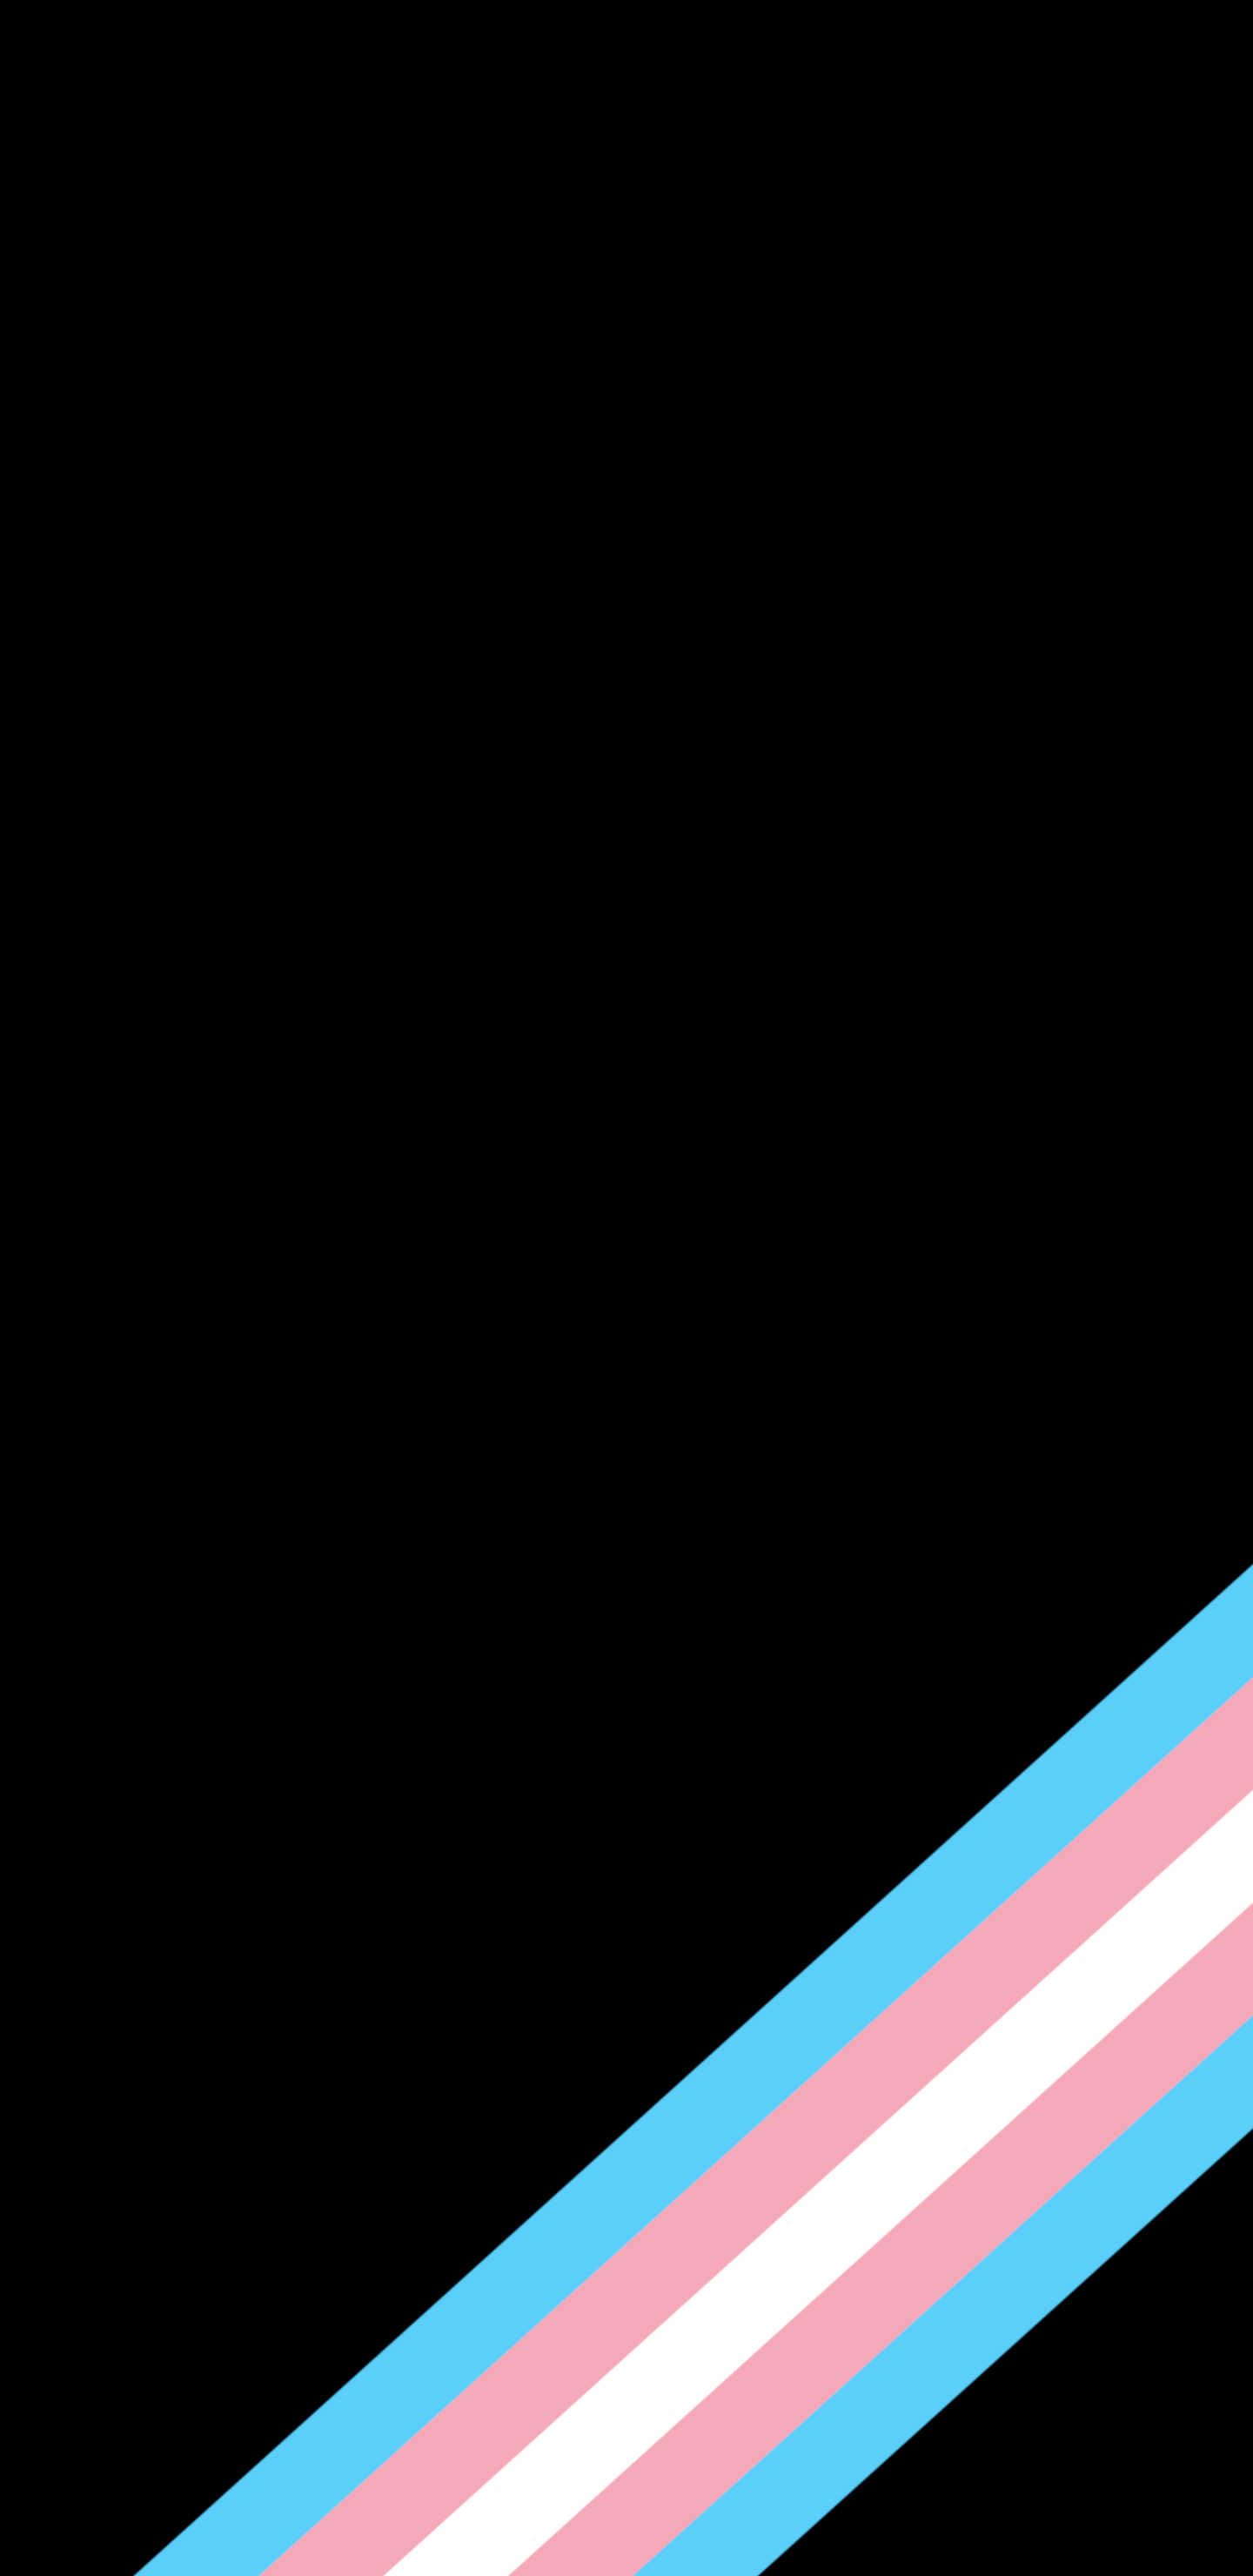 A minimal AMOLED wallpaper for the transgender community